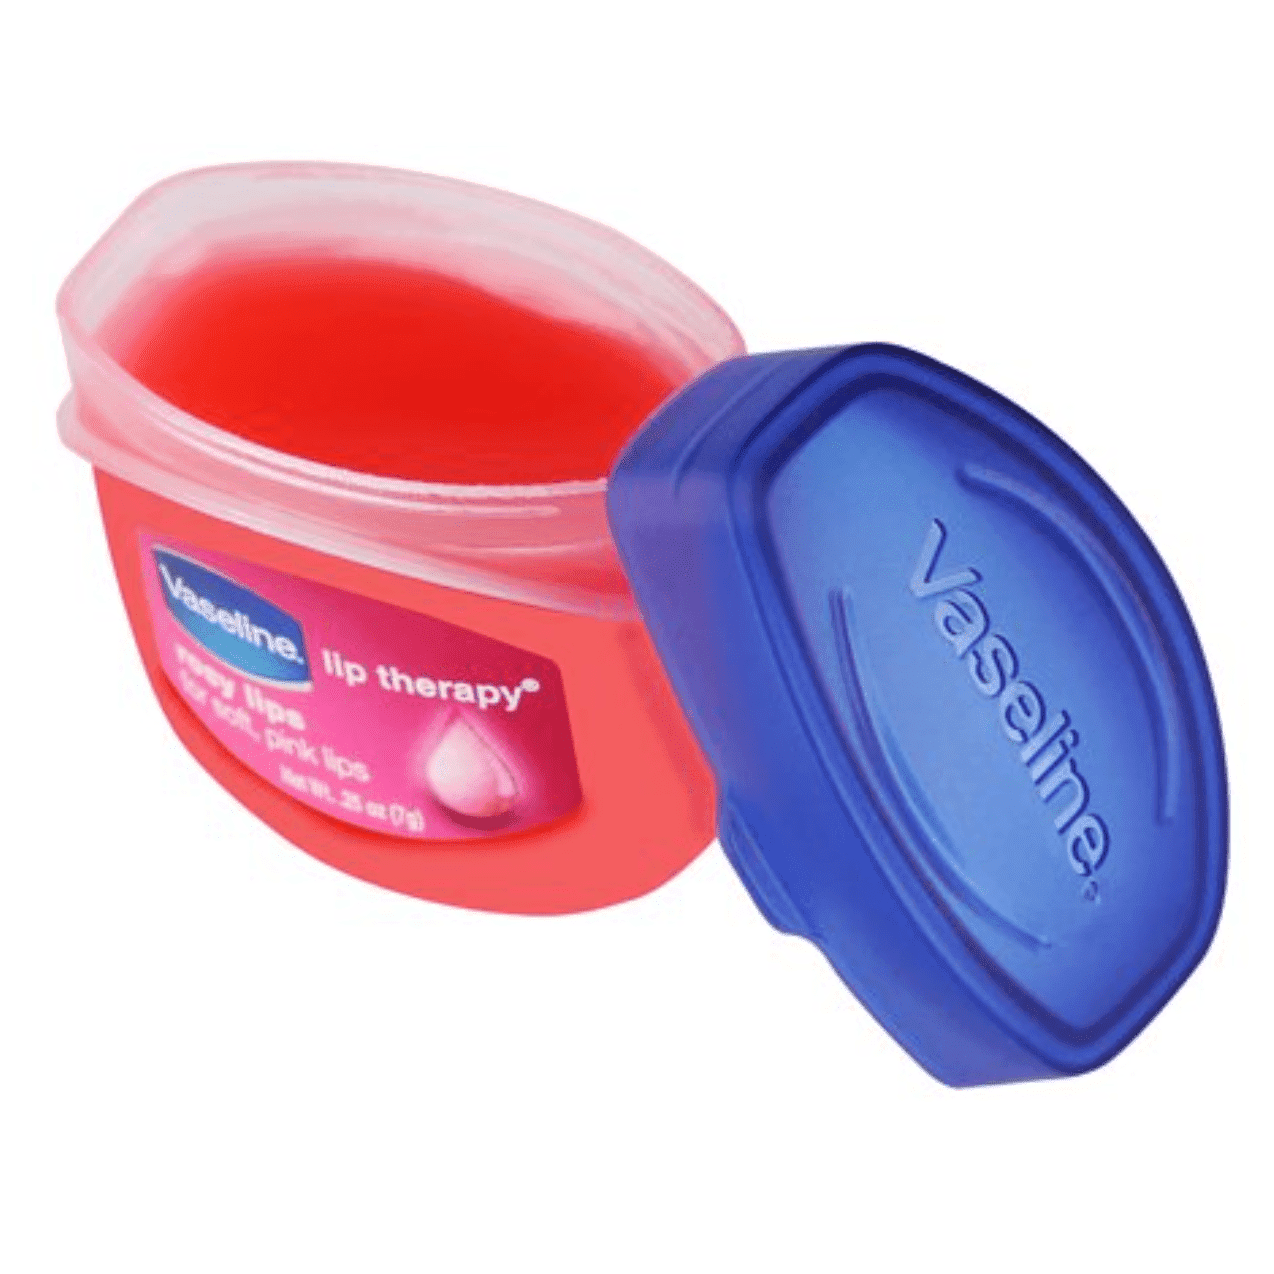 Lip Therapy (Terapia Labial) Vaseline, aroma: Rosy Lips - The Gift Shop Costa Rica